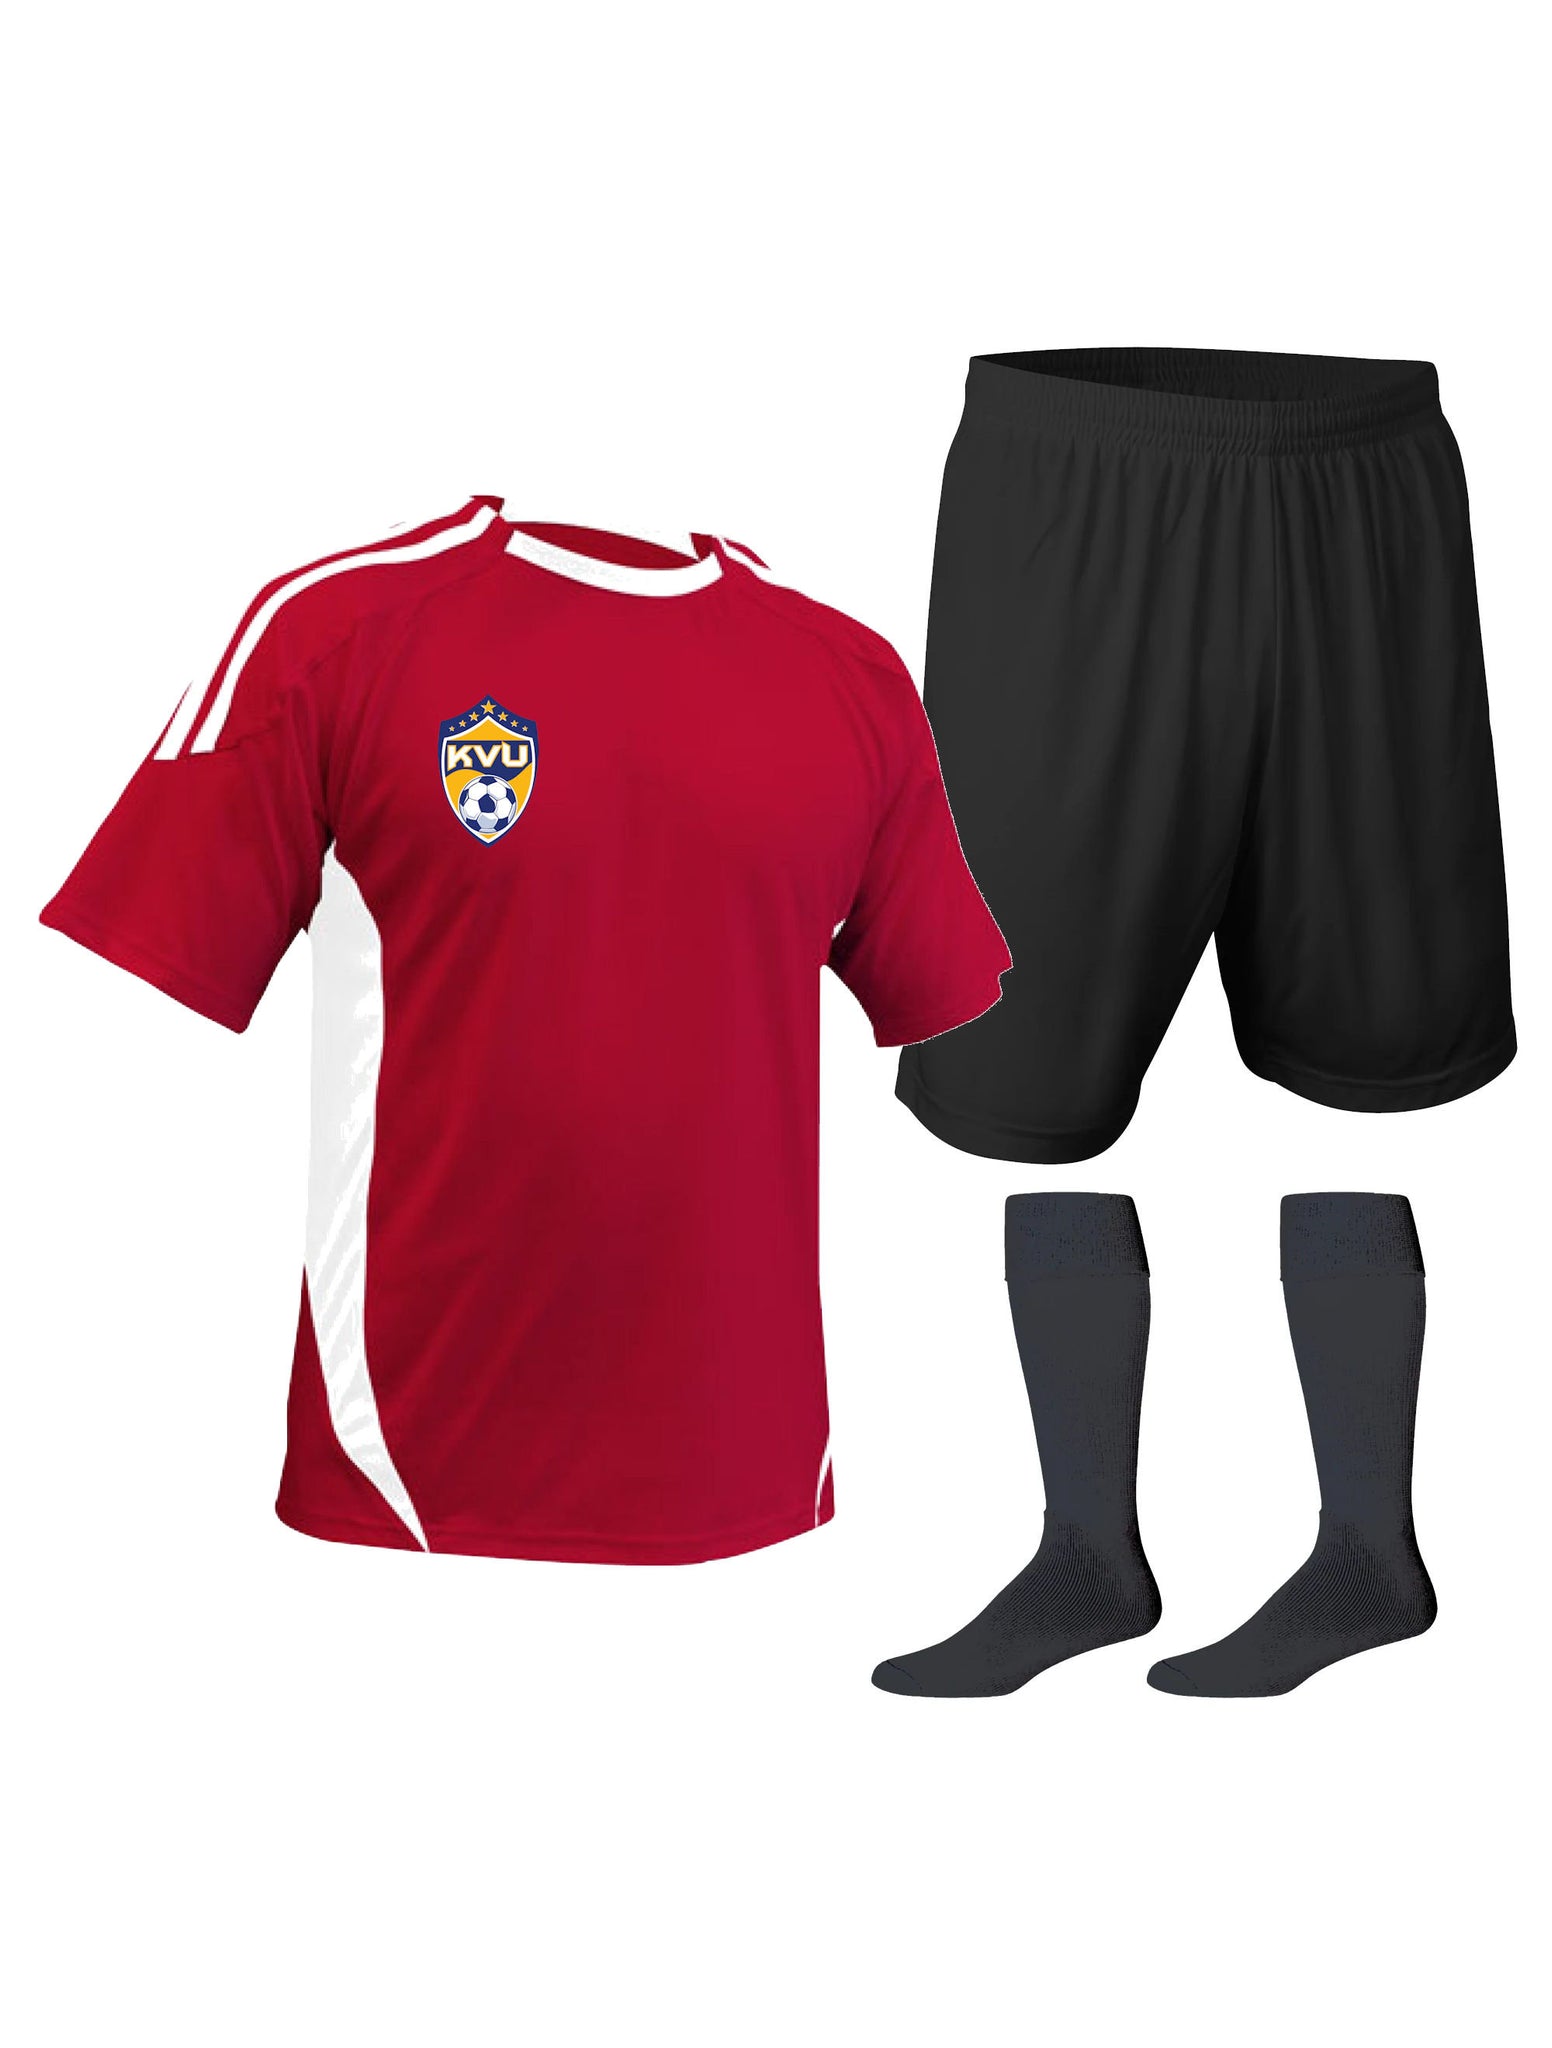 KVU Soccer Club Uniform Package